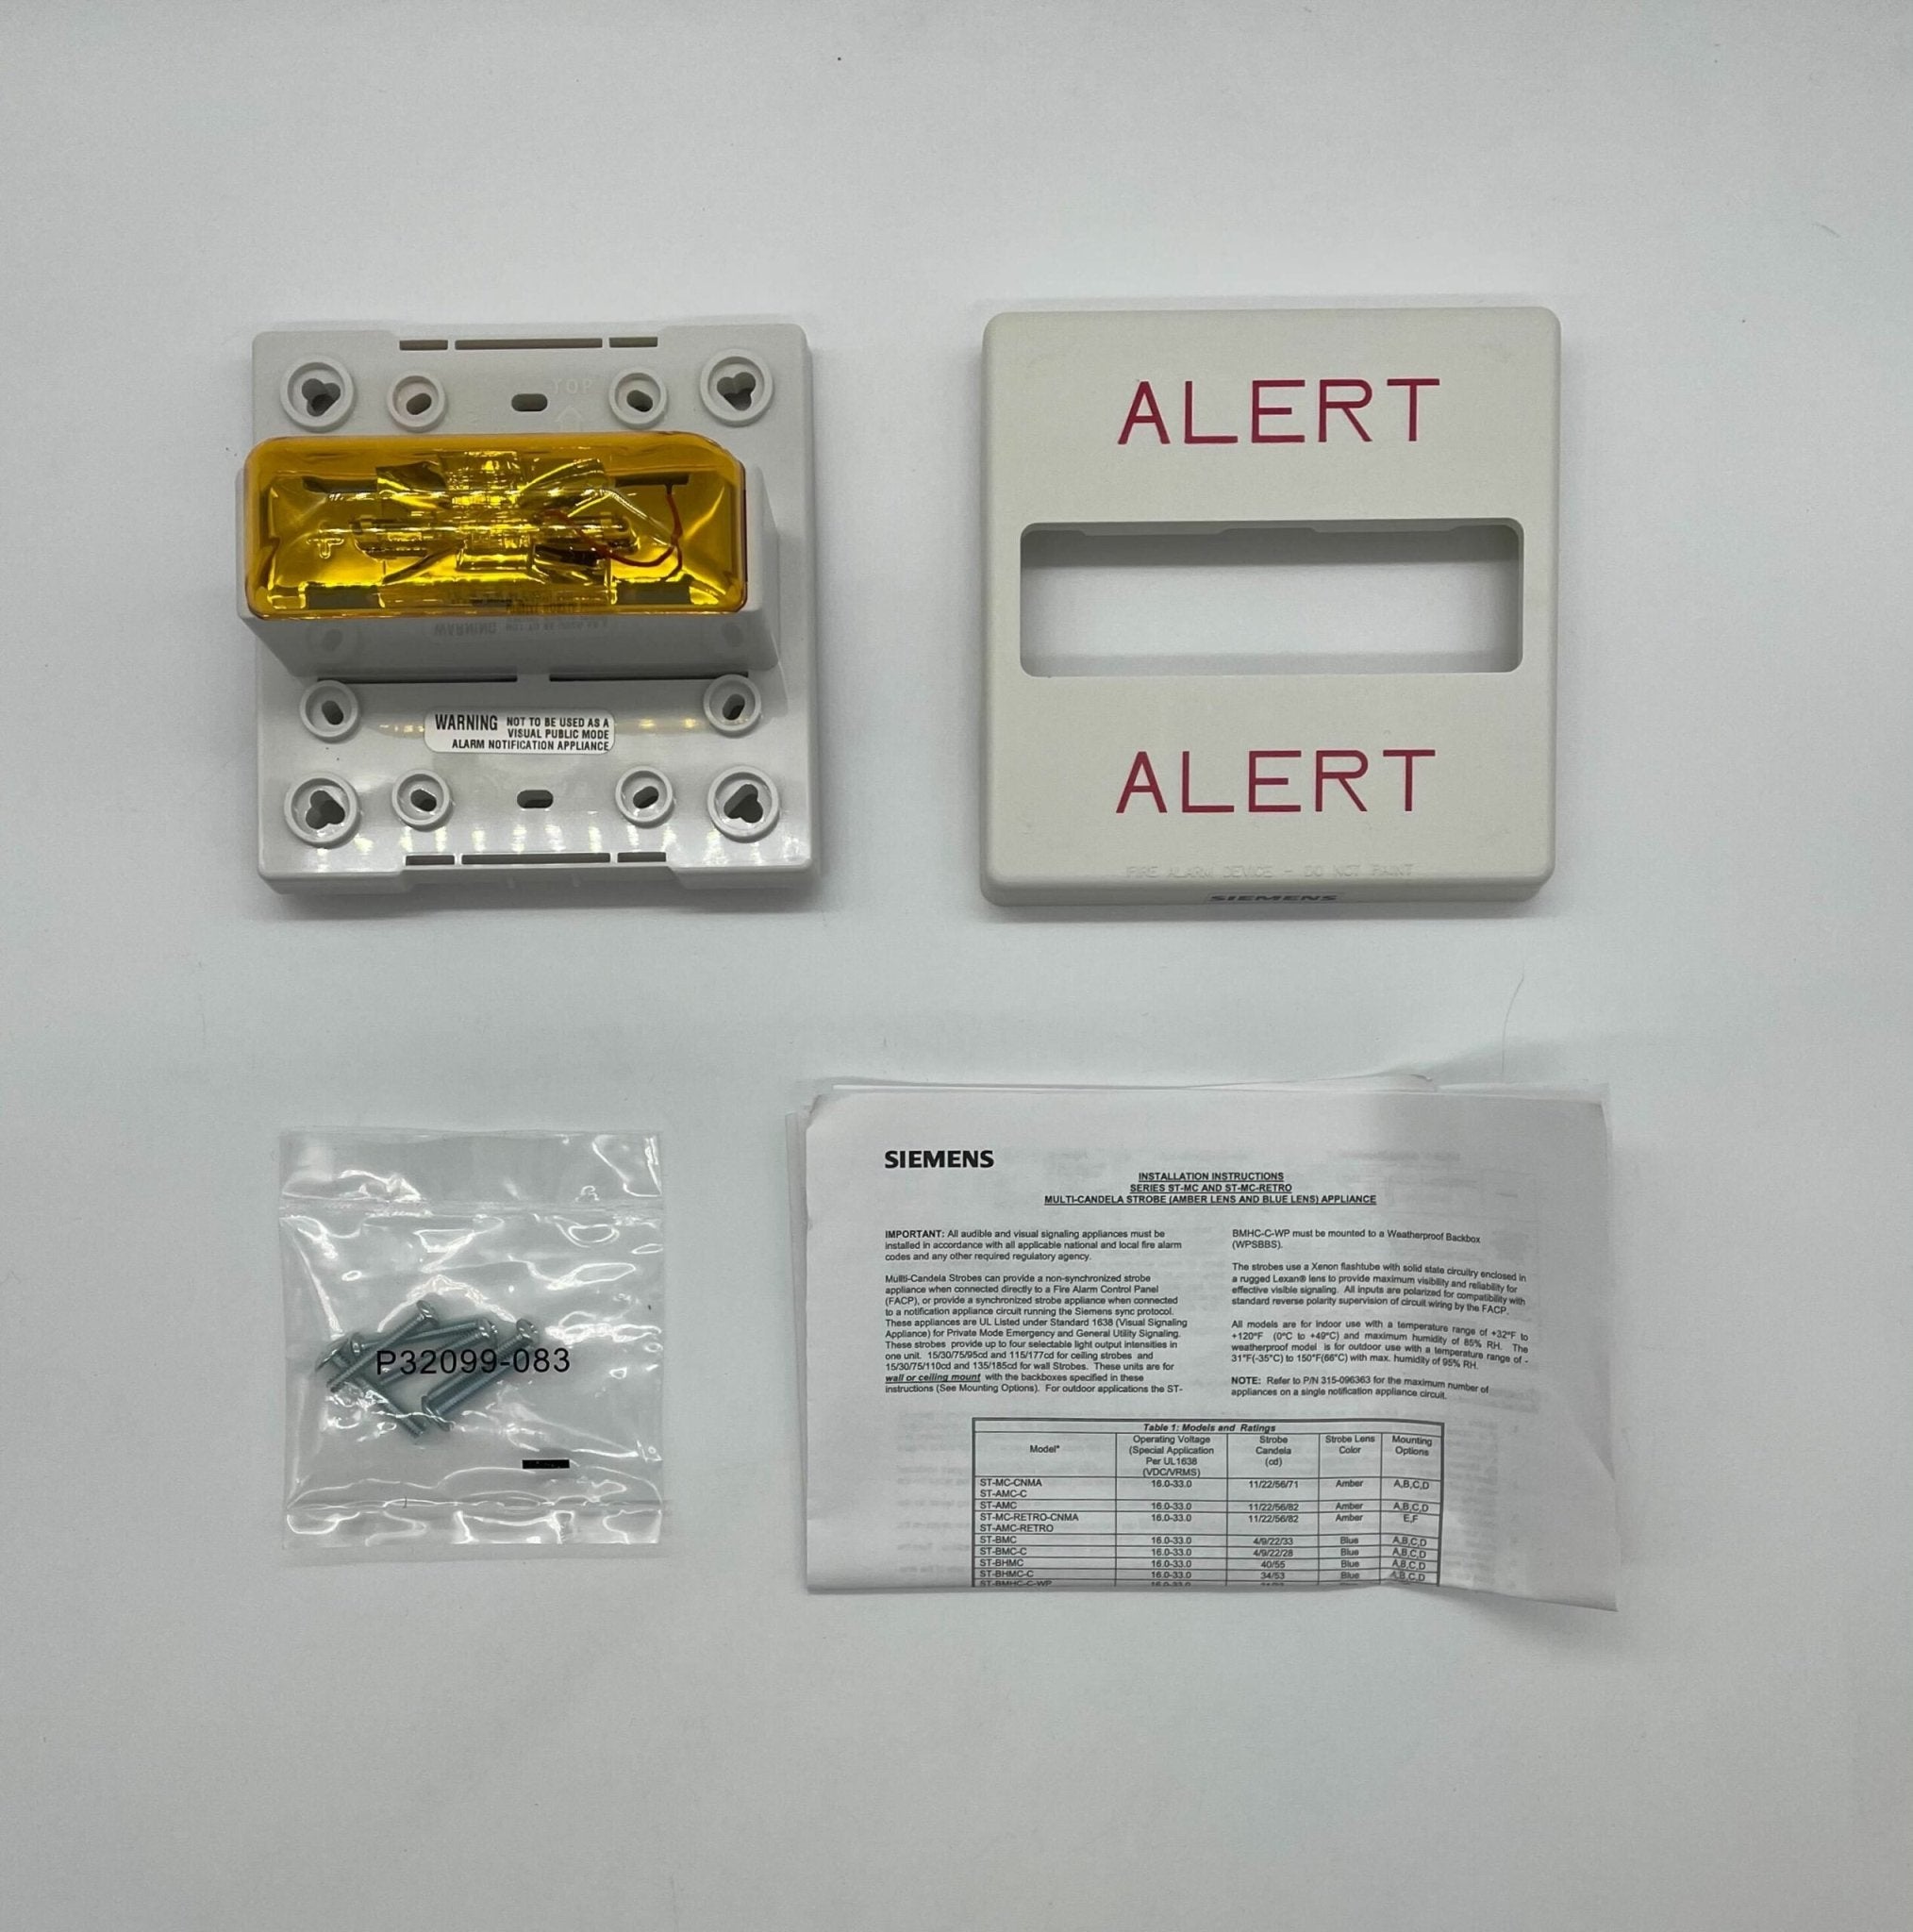 Siemens ST-AMC-W-MNS-ALERT - The Fire Alarm Supplier